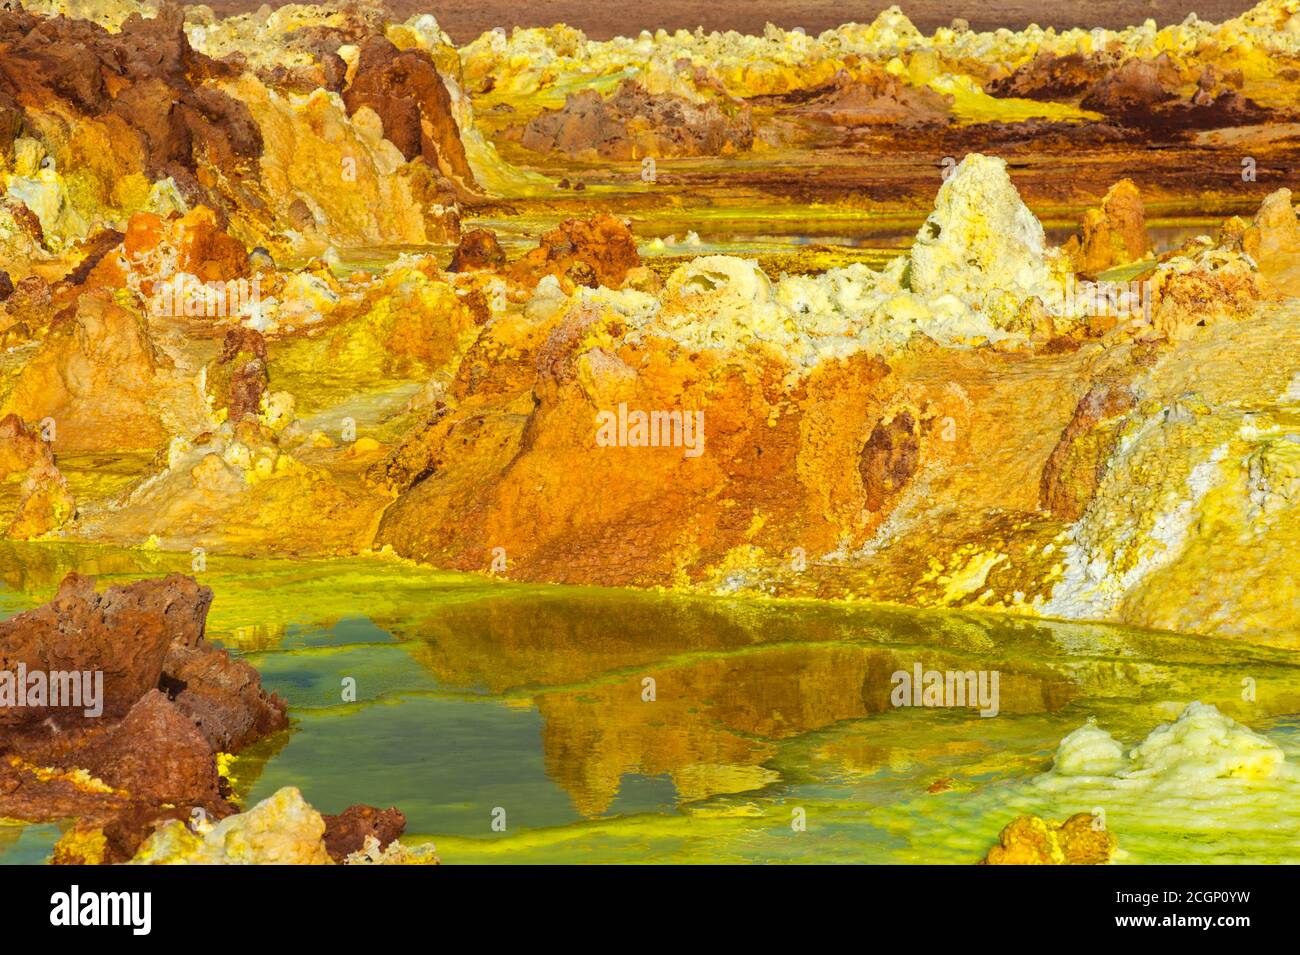 Strutture saline in una piscina di salamoia acida altamente saturata, zona geotermica di Dallol, deserto di Danakil, Triangolo di Afar, Etiopia Foto Stock